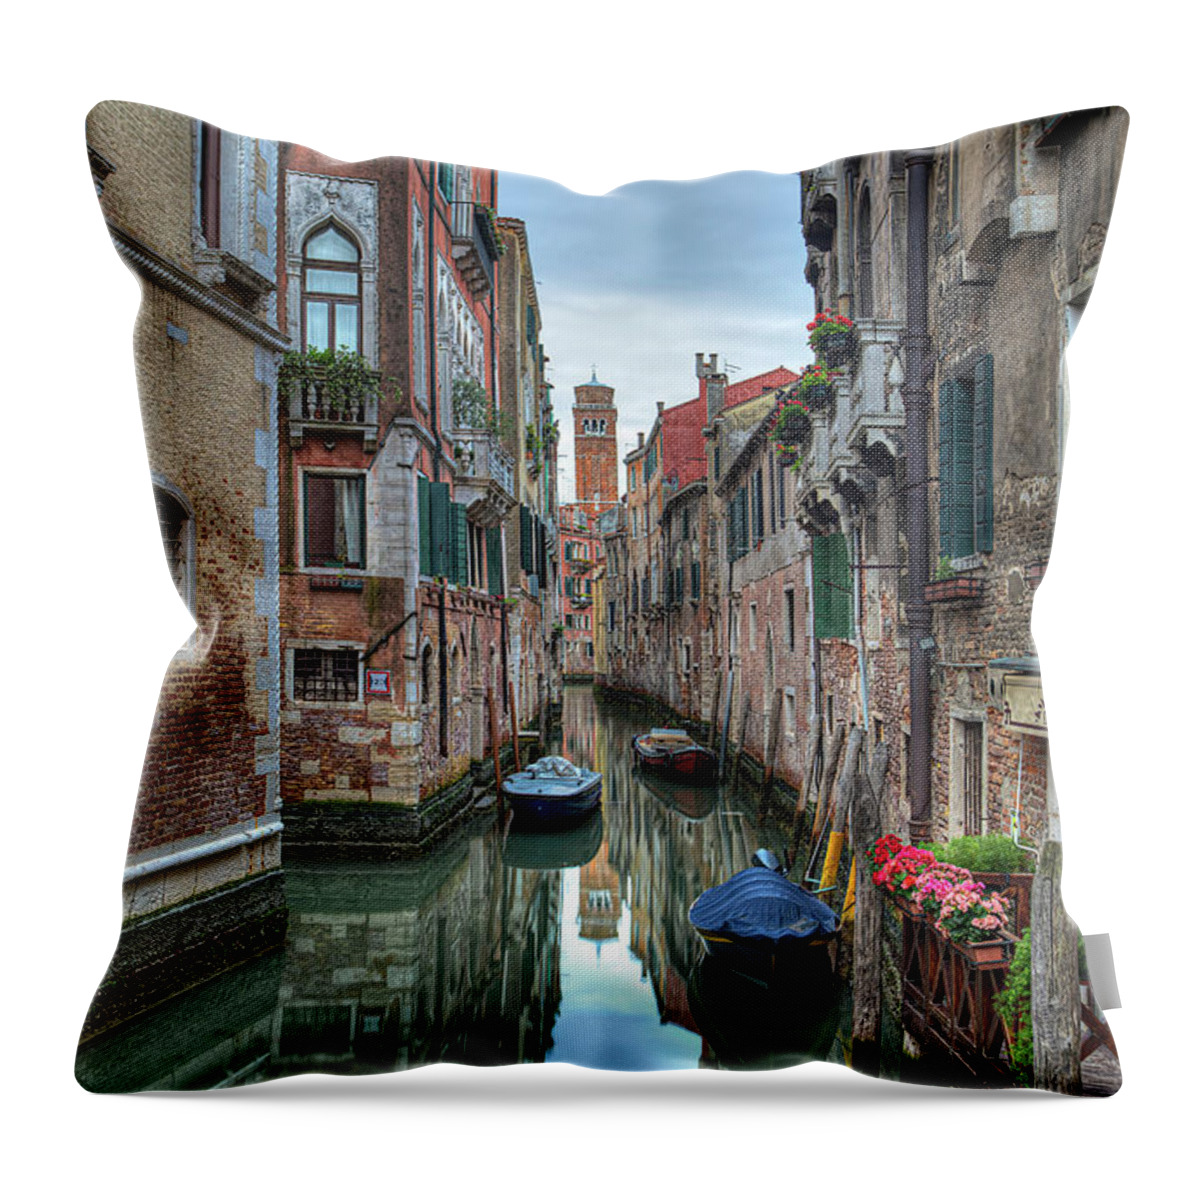 Venice Throw Pillow featuring the photograph Venetian Morning by Peter Kennett